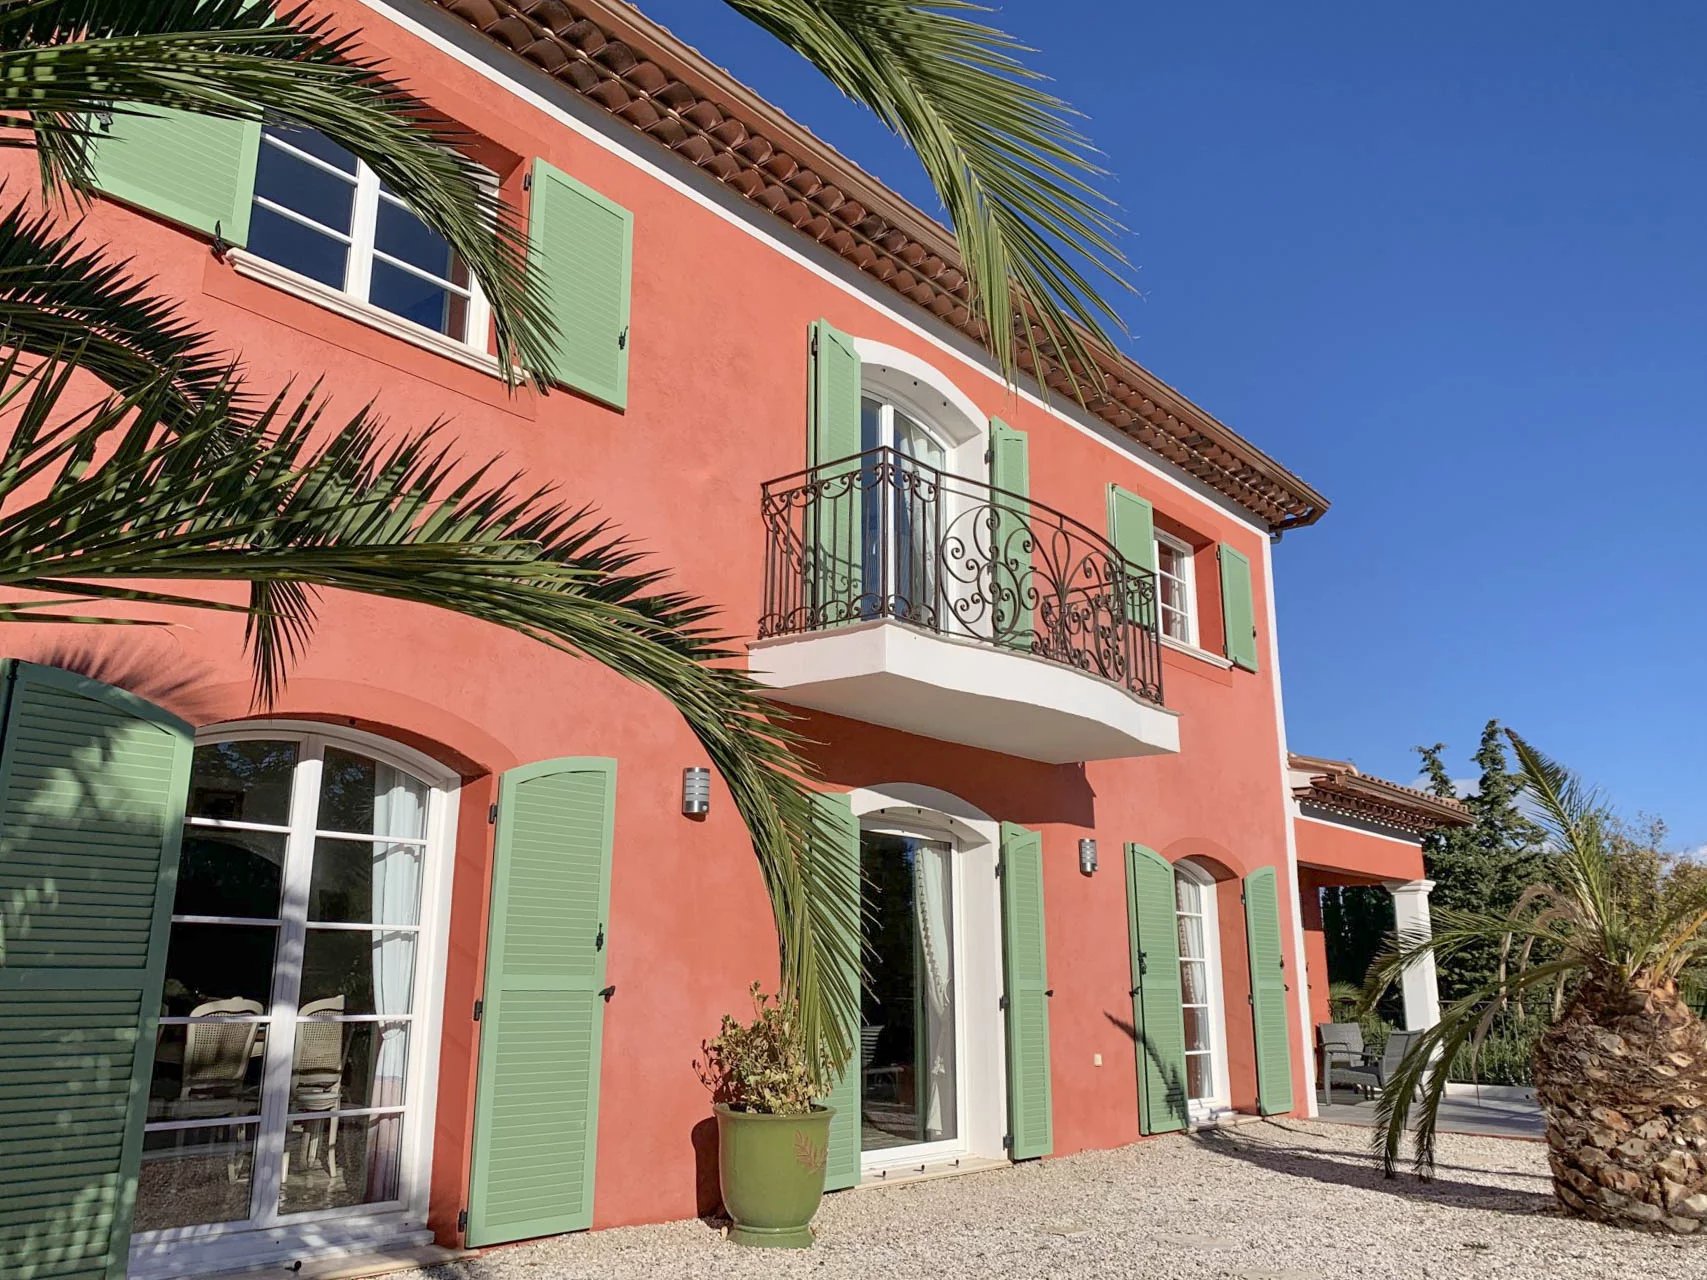 Quality villa with pool - Montauroux